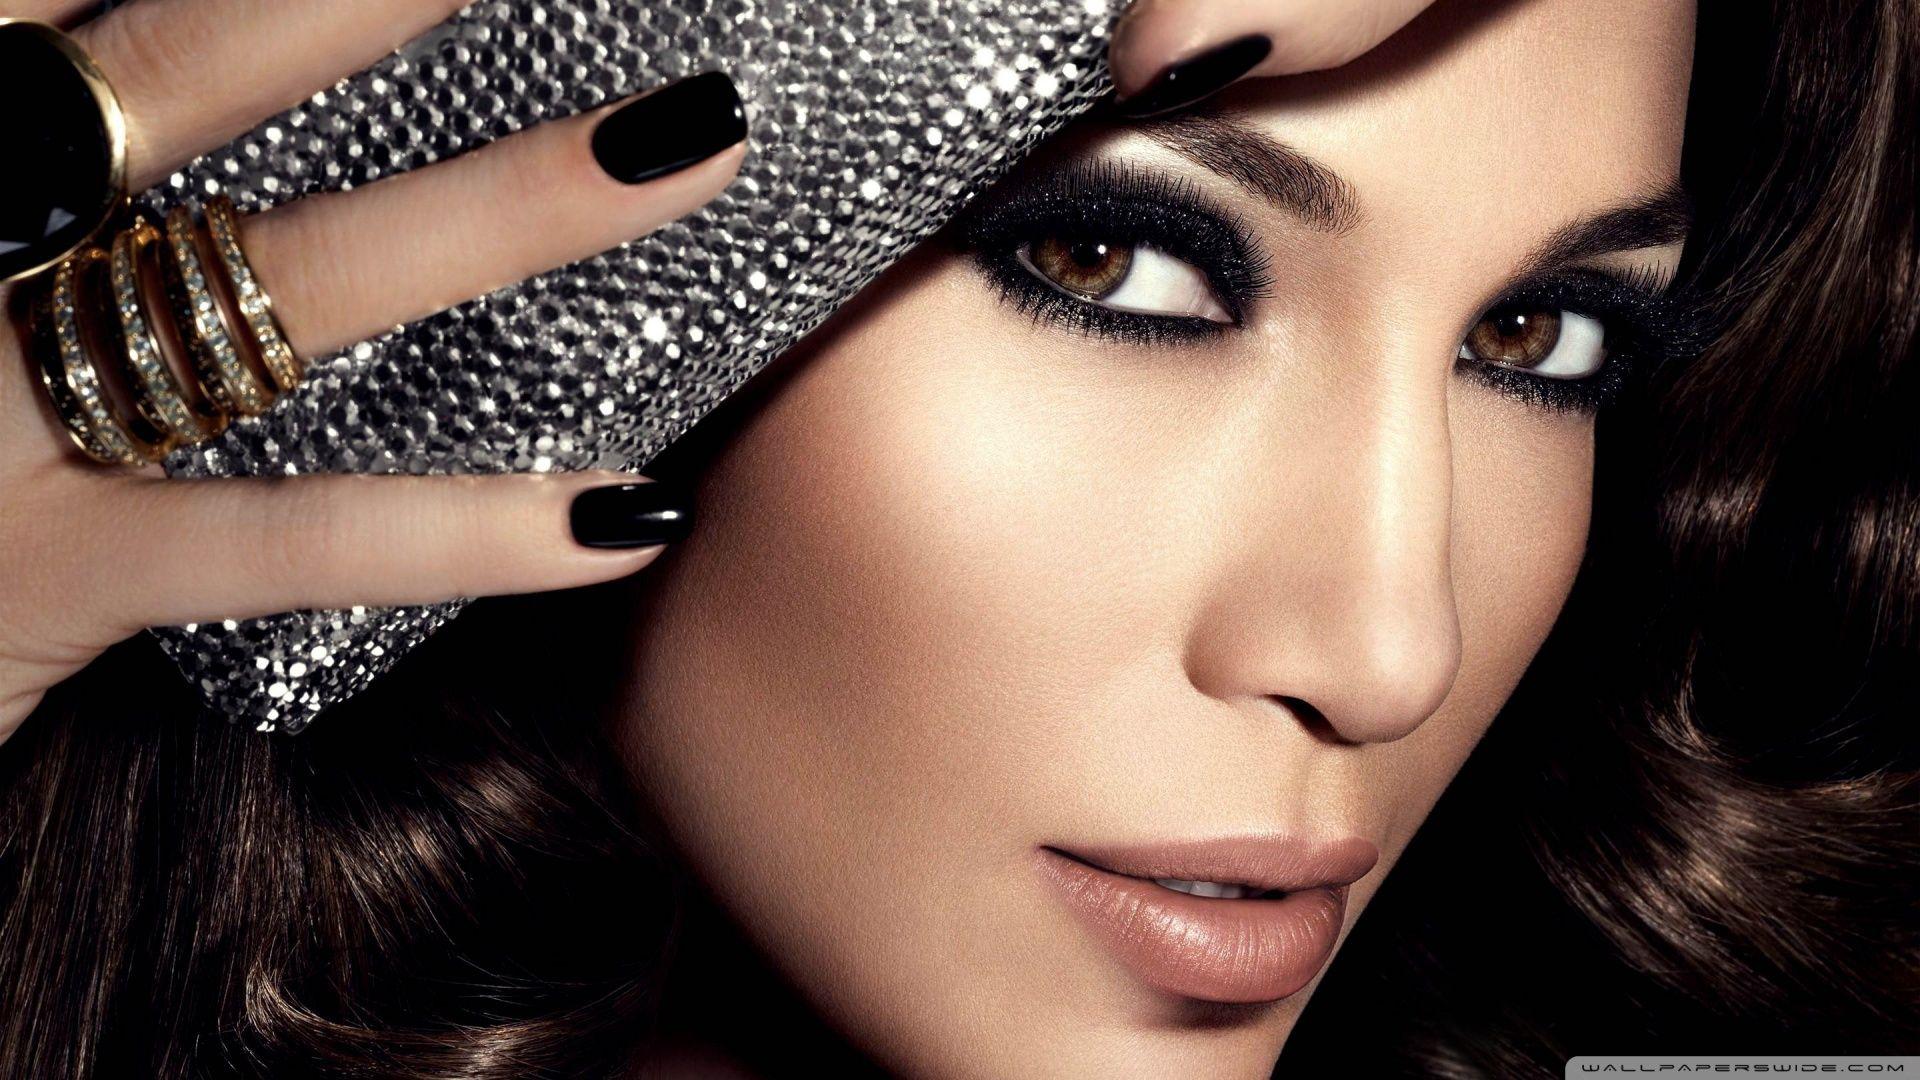 Jennifer Lopez 2014 HD desktop wallpapers : High Definition